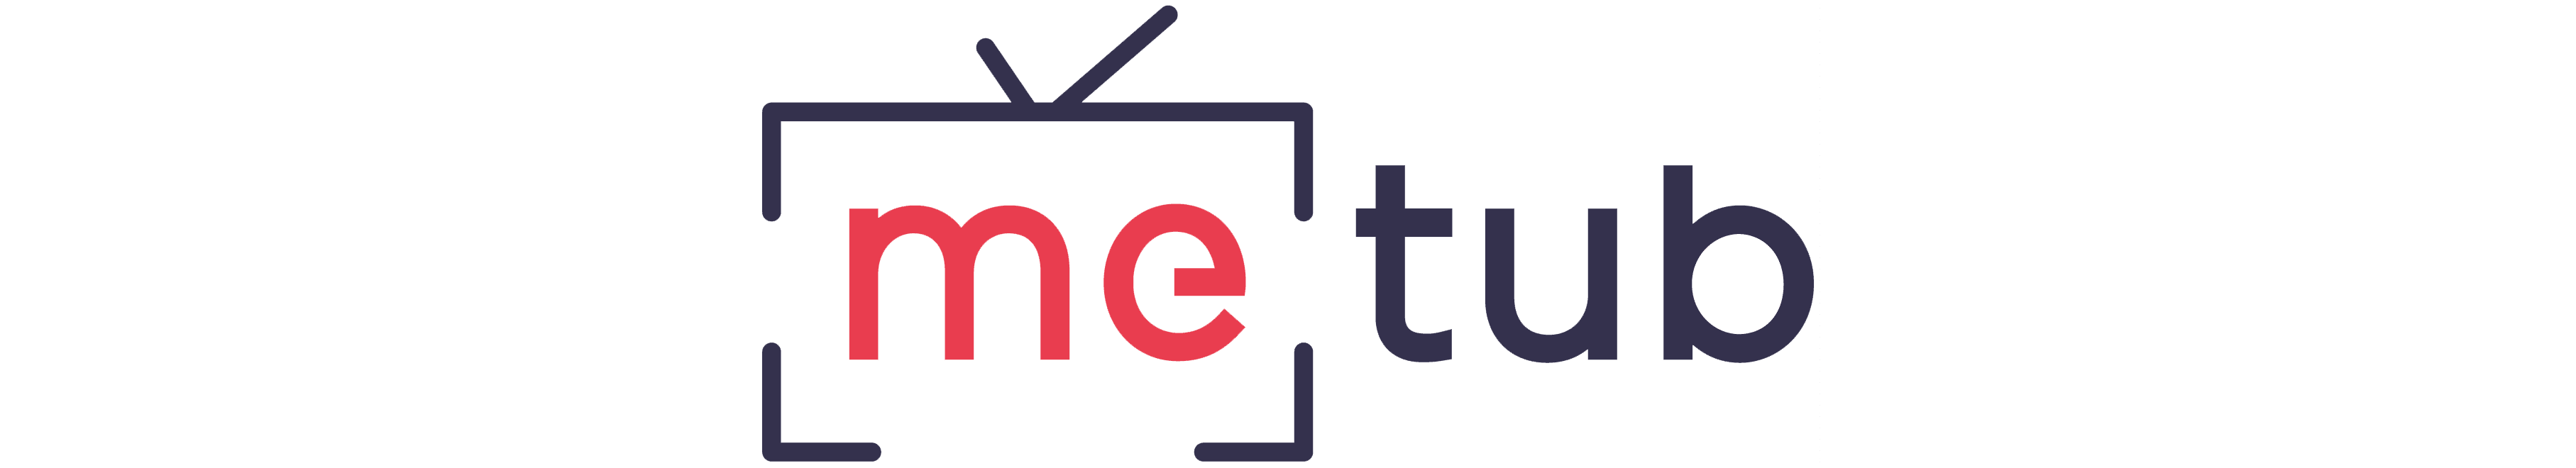 Metub Network client logo